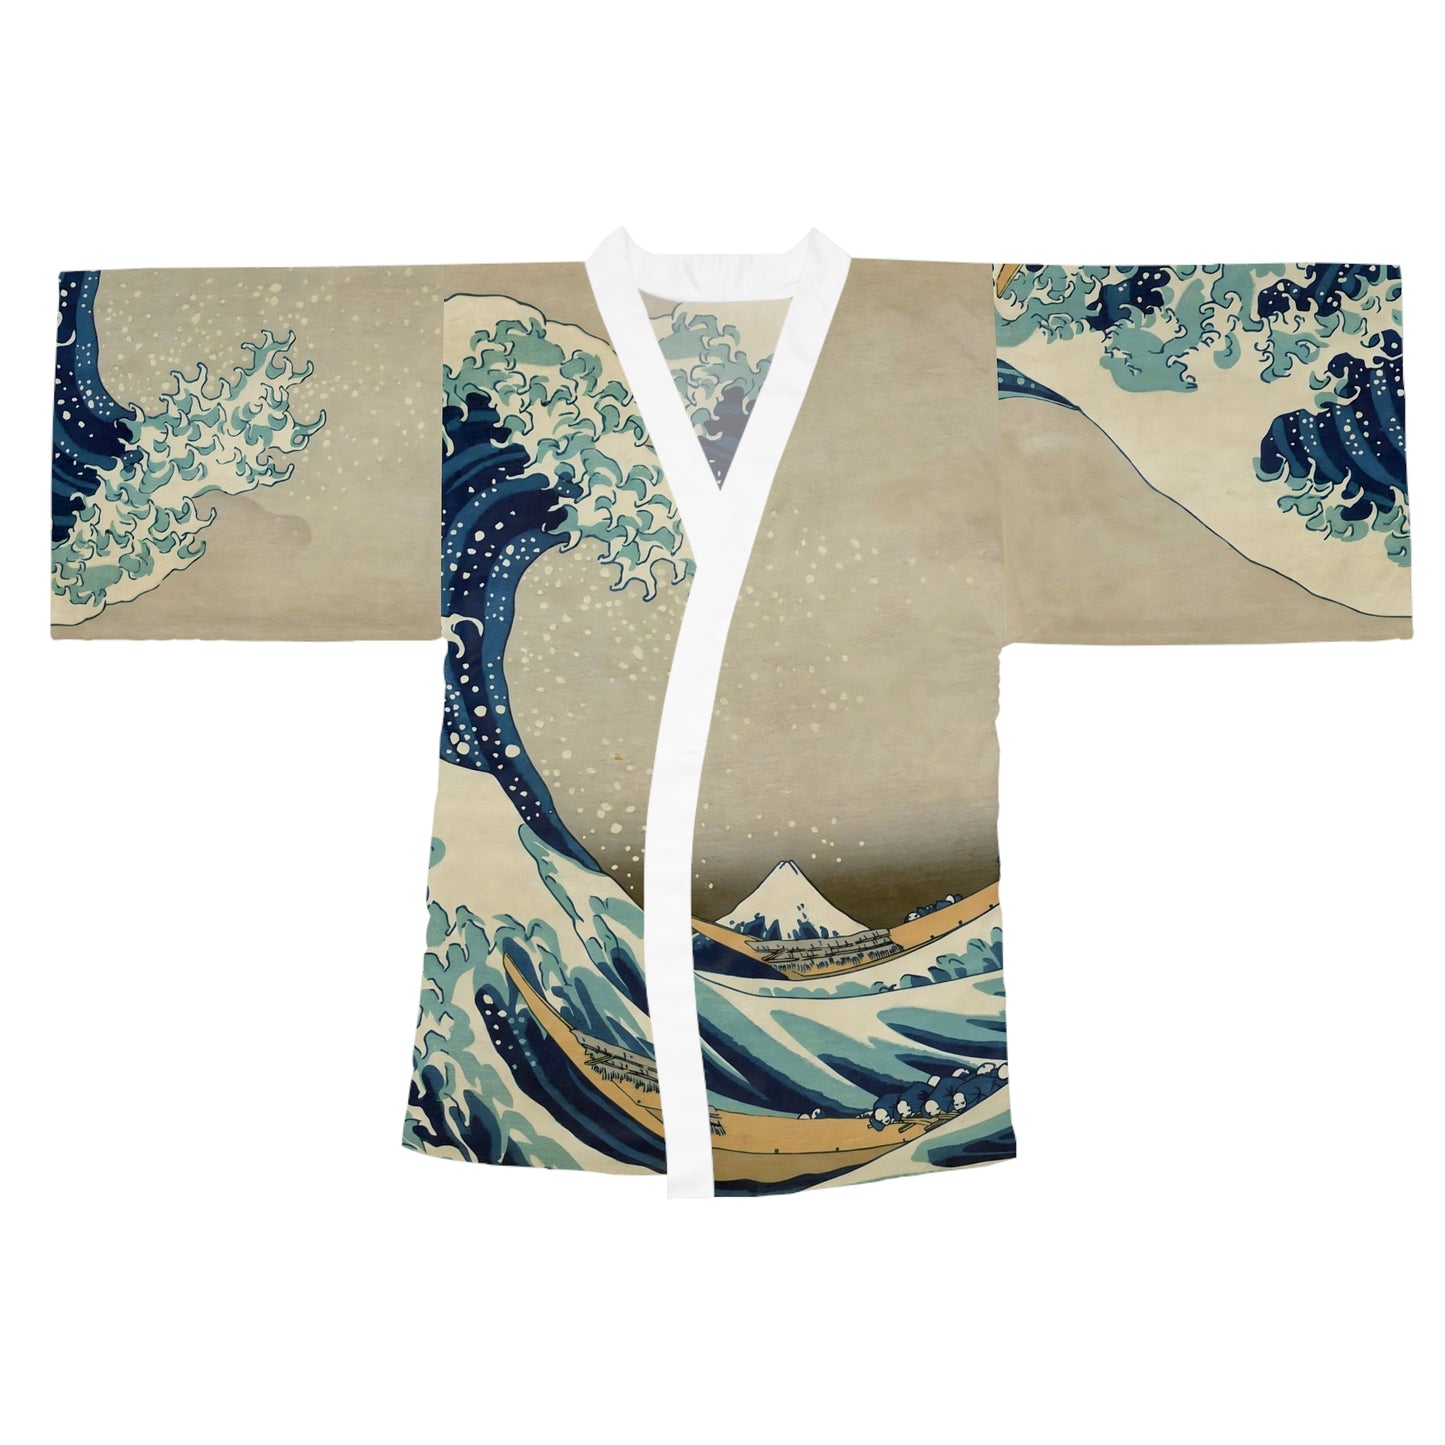 Kimono Robe The Great Wave off Kanagawa from Hokusai